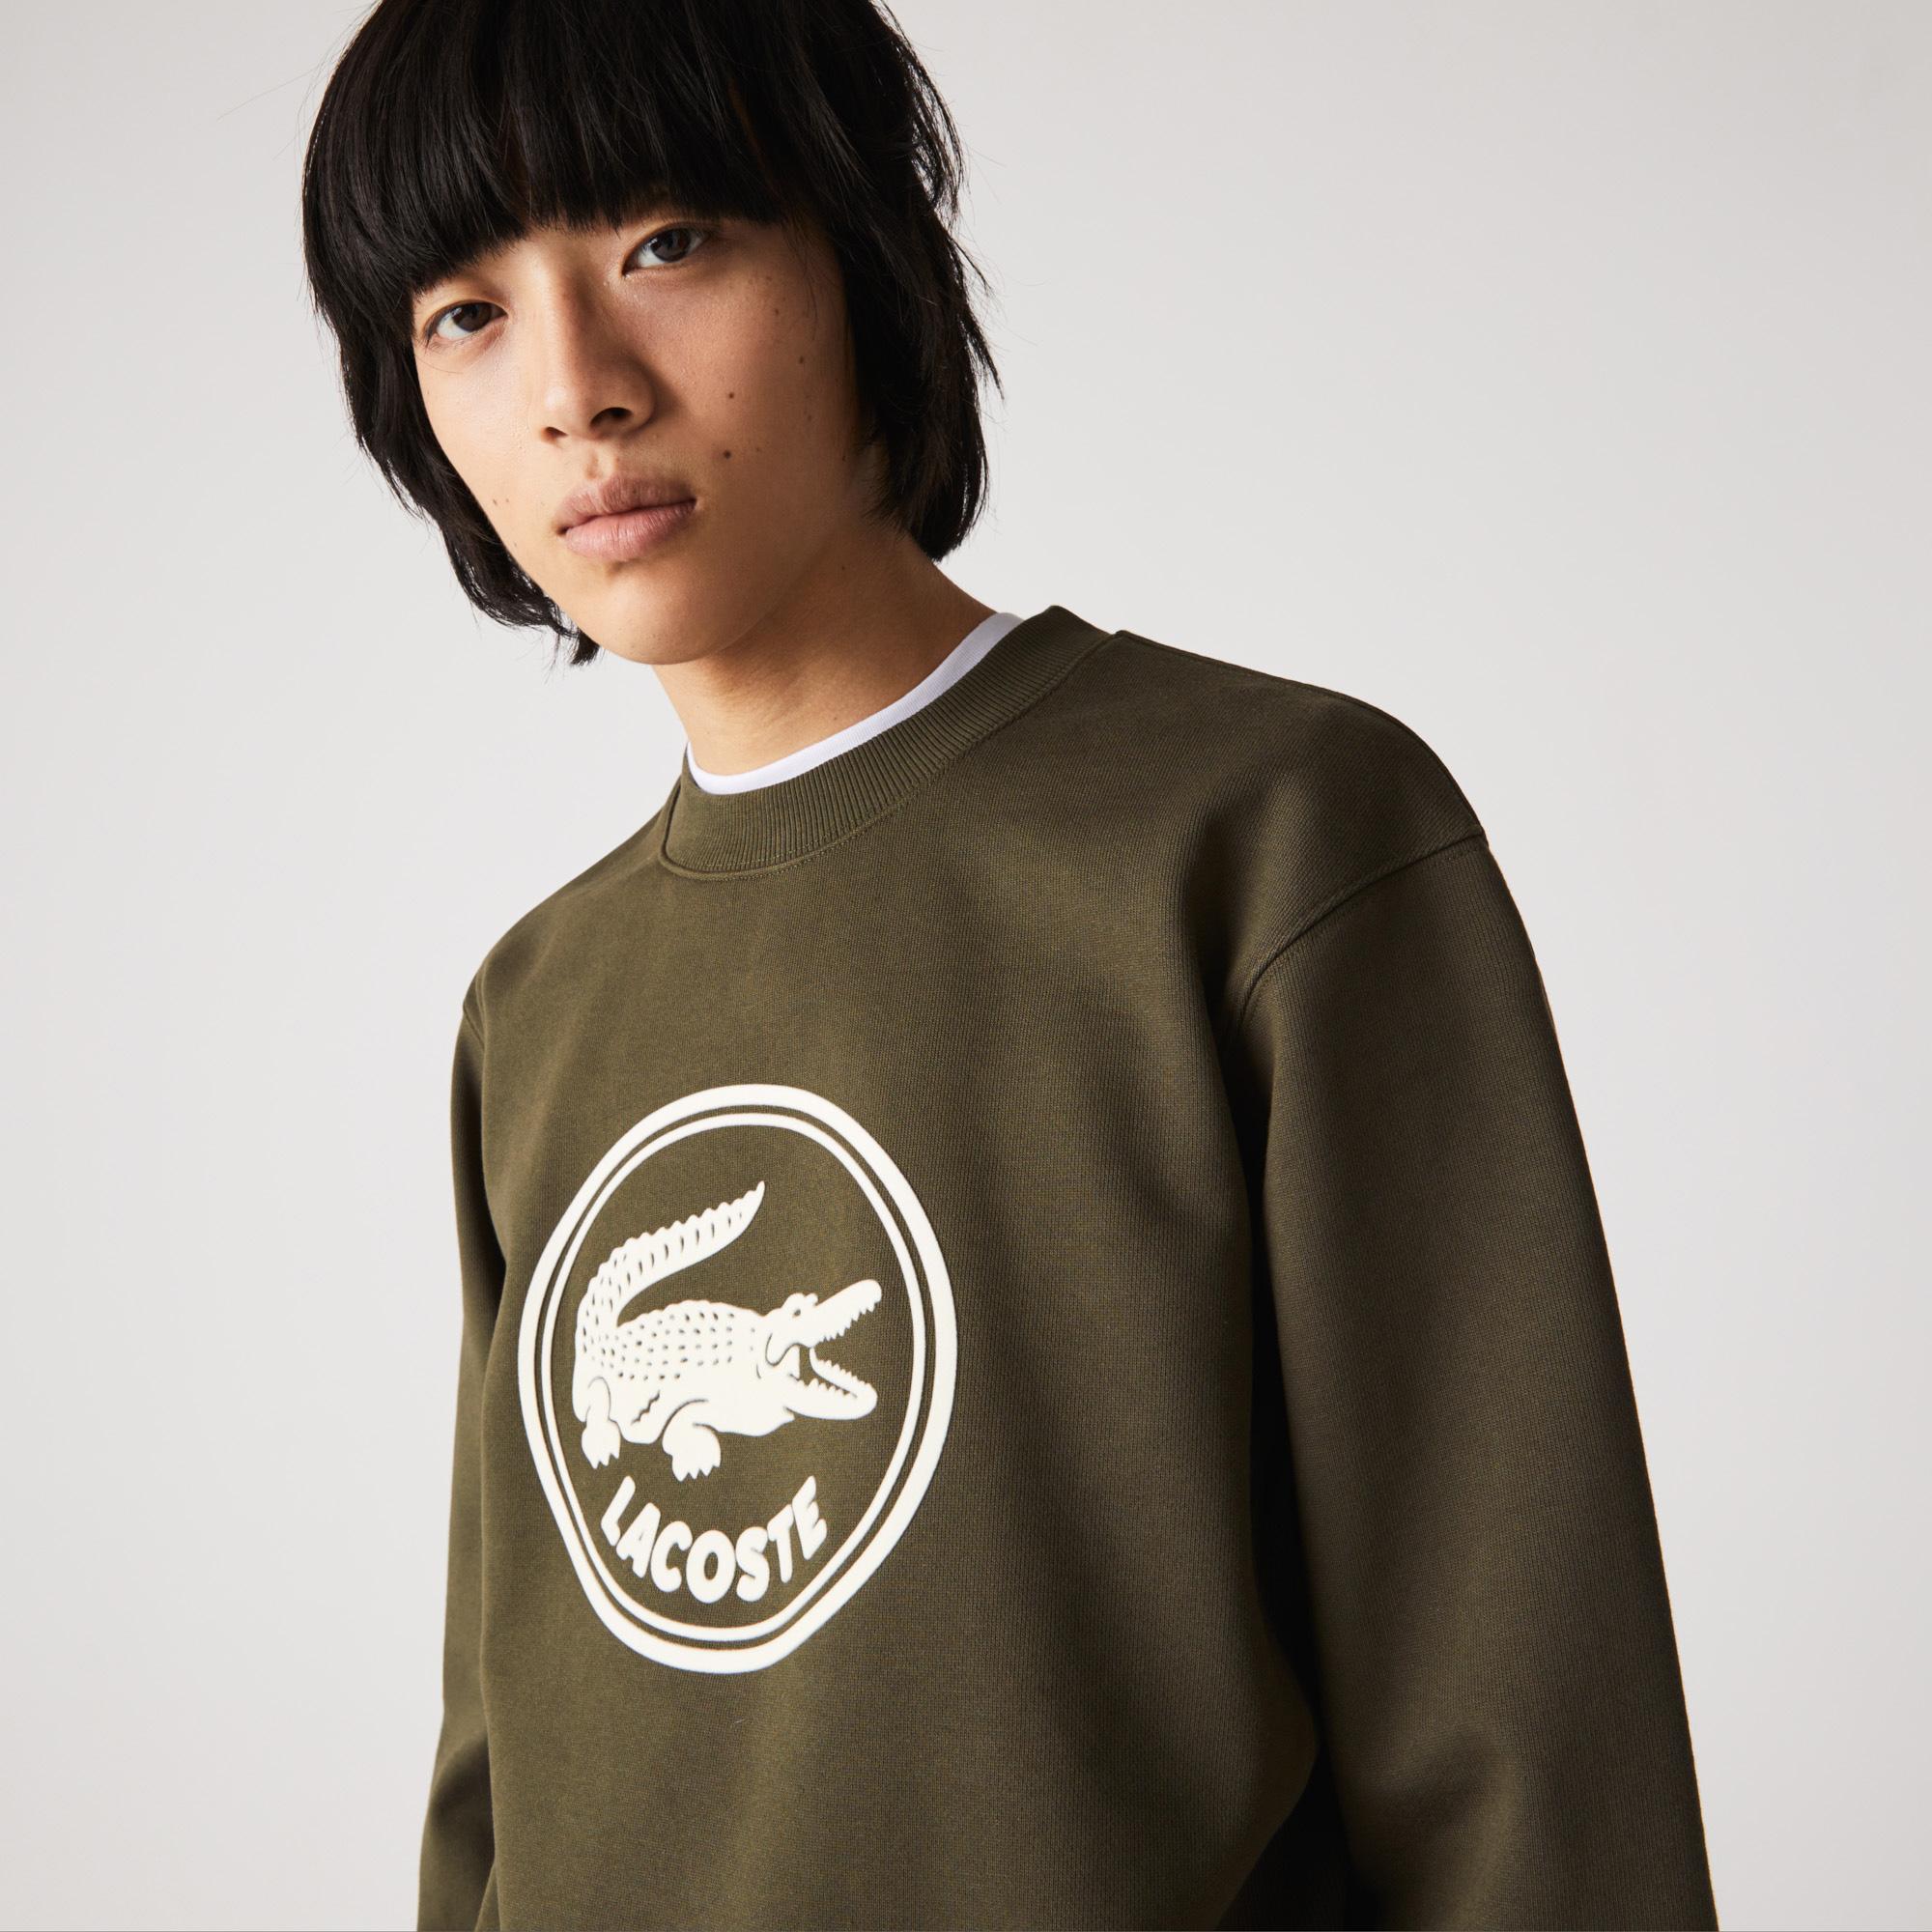 Lacoste hoodie unisex from organic polaru cotton, logo 3D